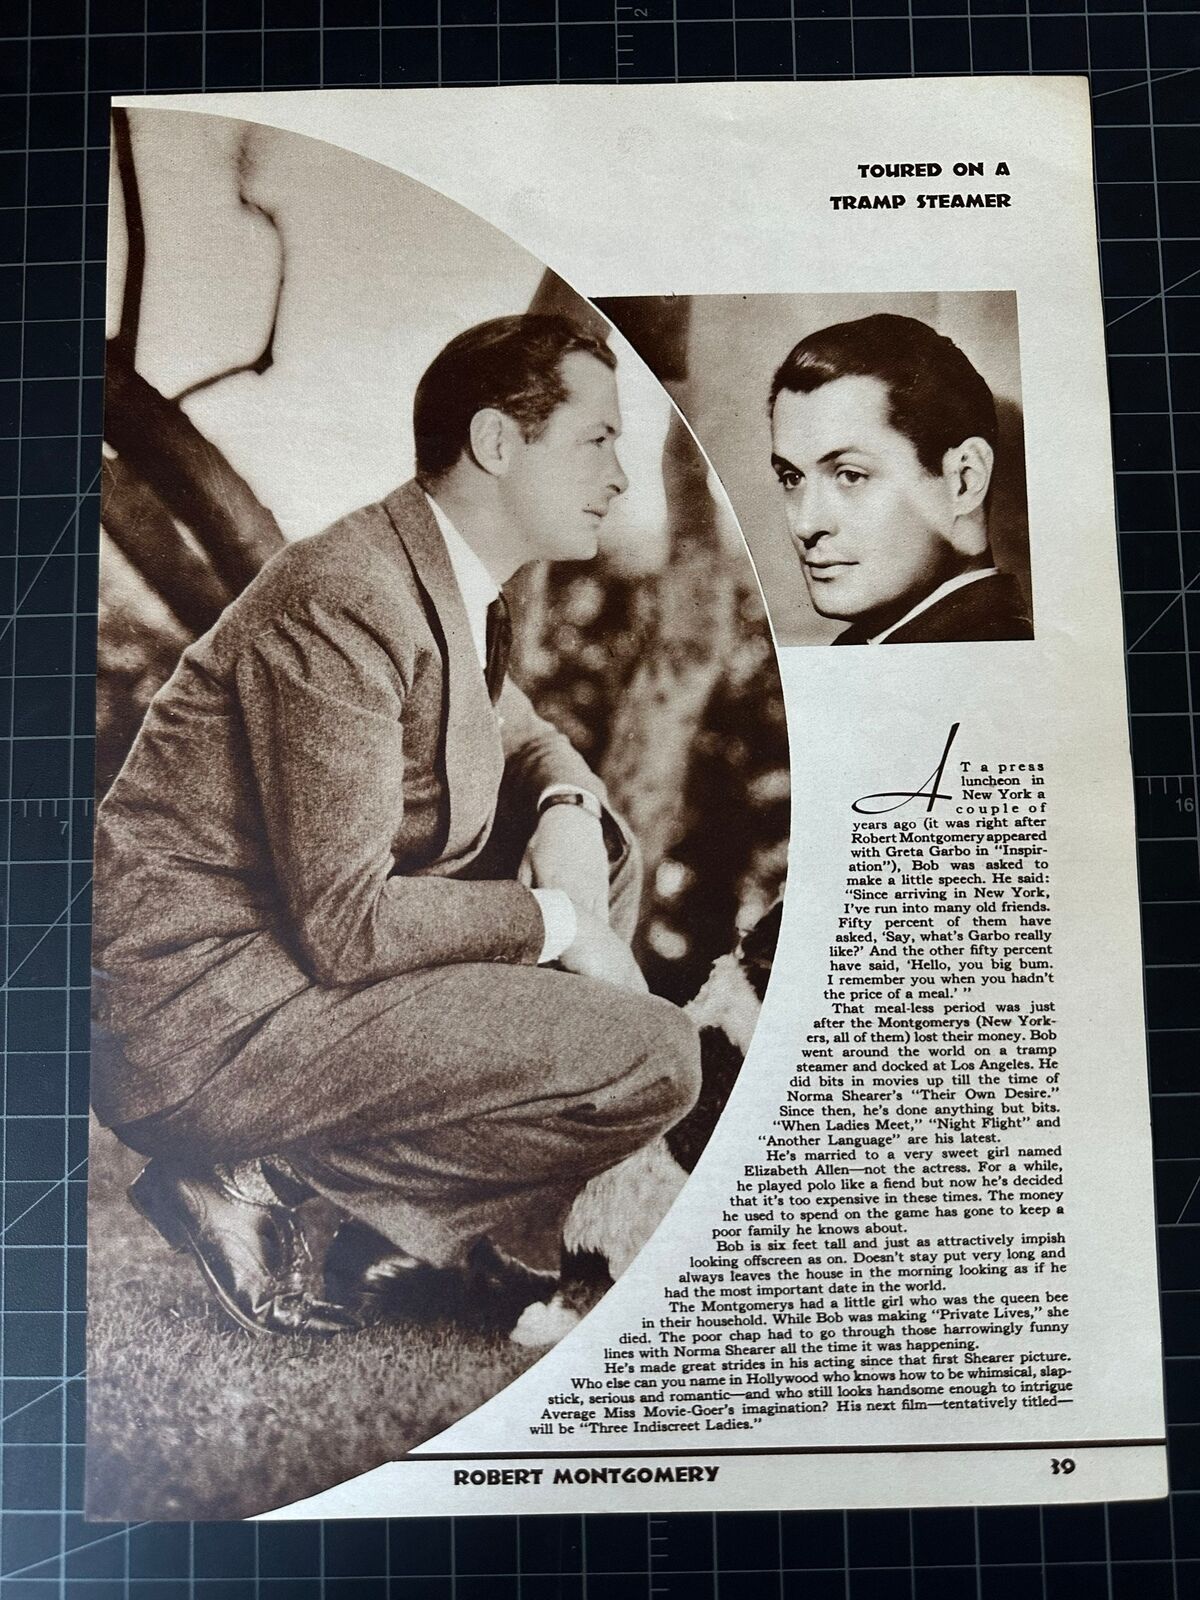 Rare Vintage 1930s Robert Montgomery Portrait + Bio - Old Hollywood